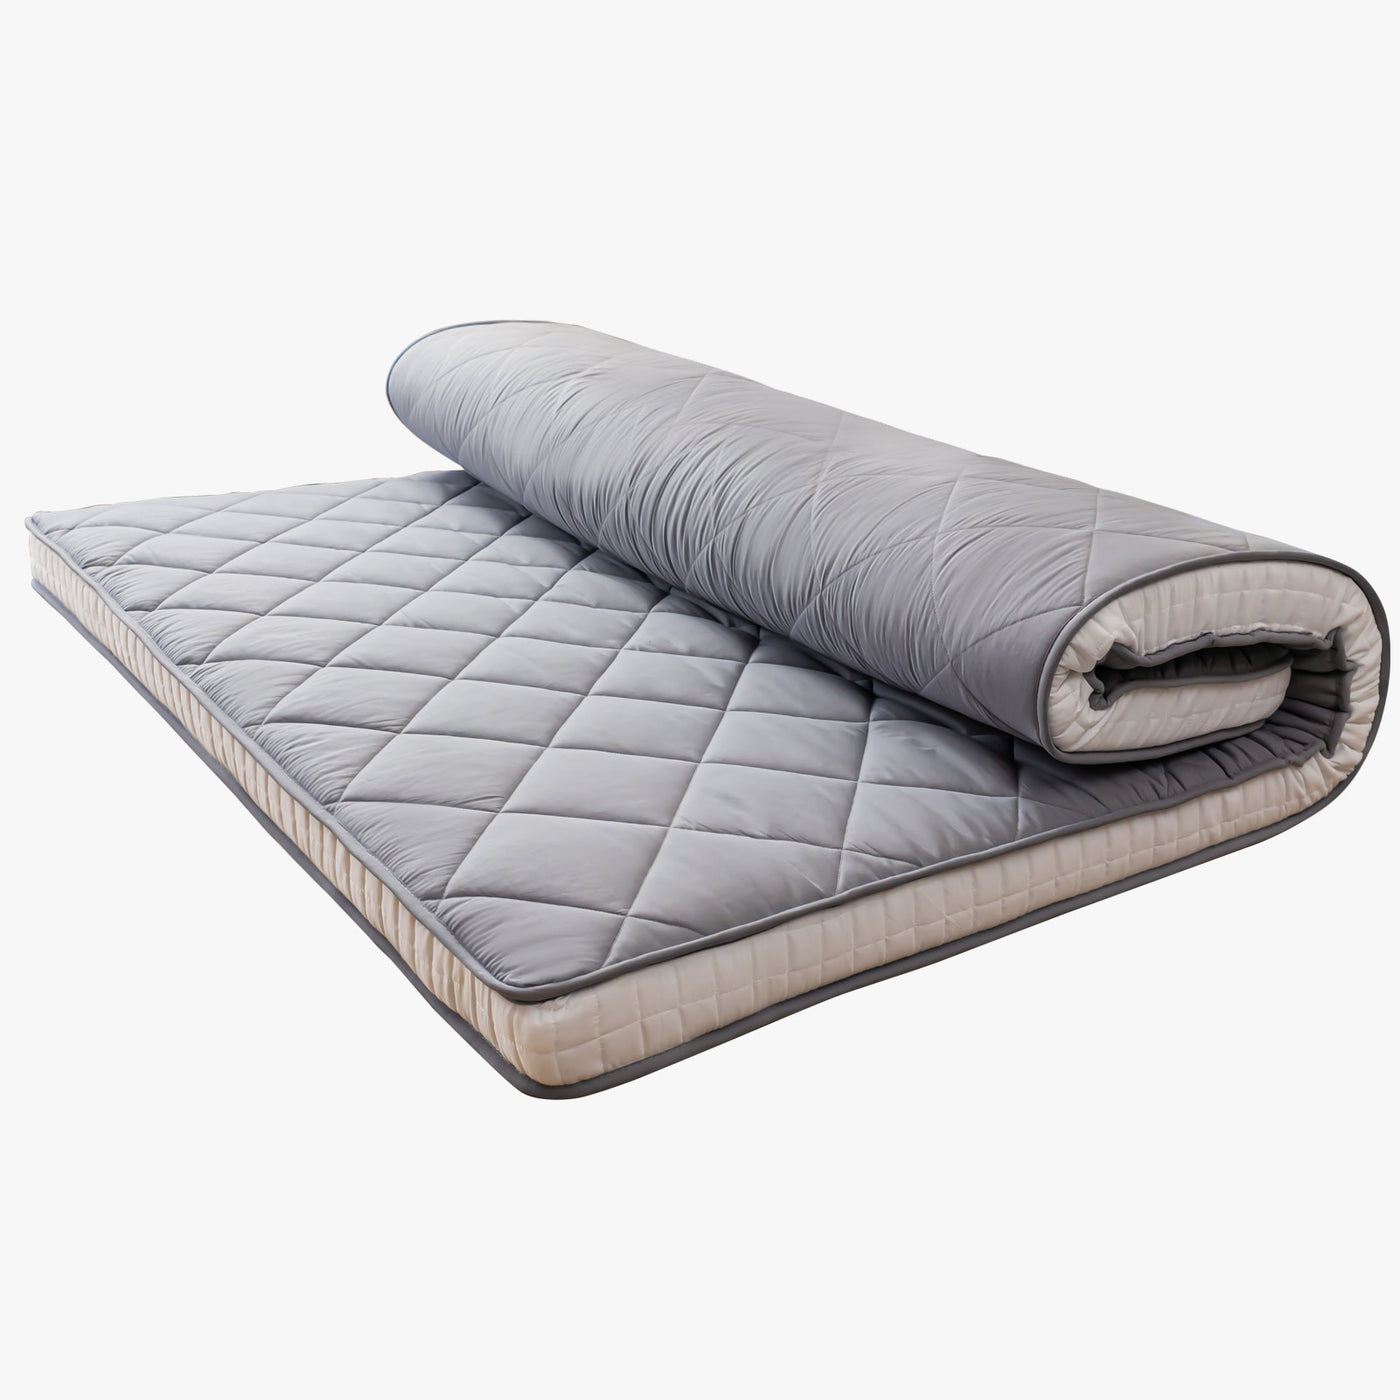 MAXYOYO Japanese Floor Futon Mattress, Diamond Patterned Roll Up Folding Floor Bed, Grey